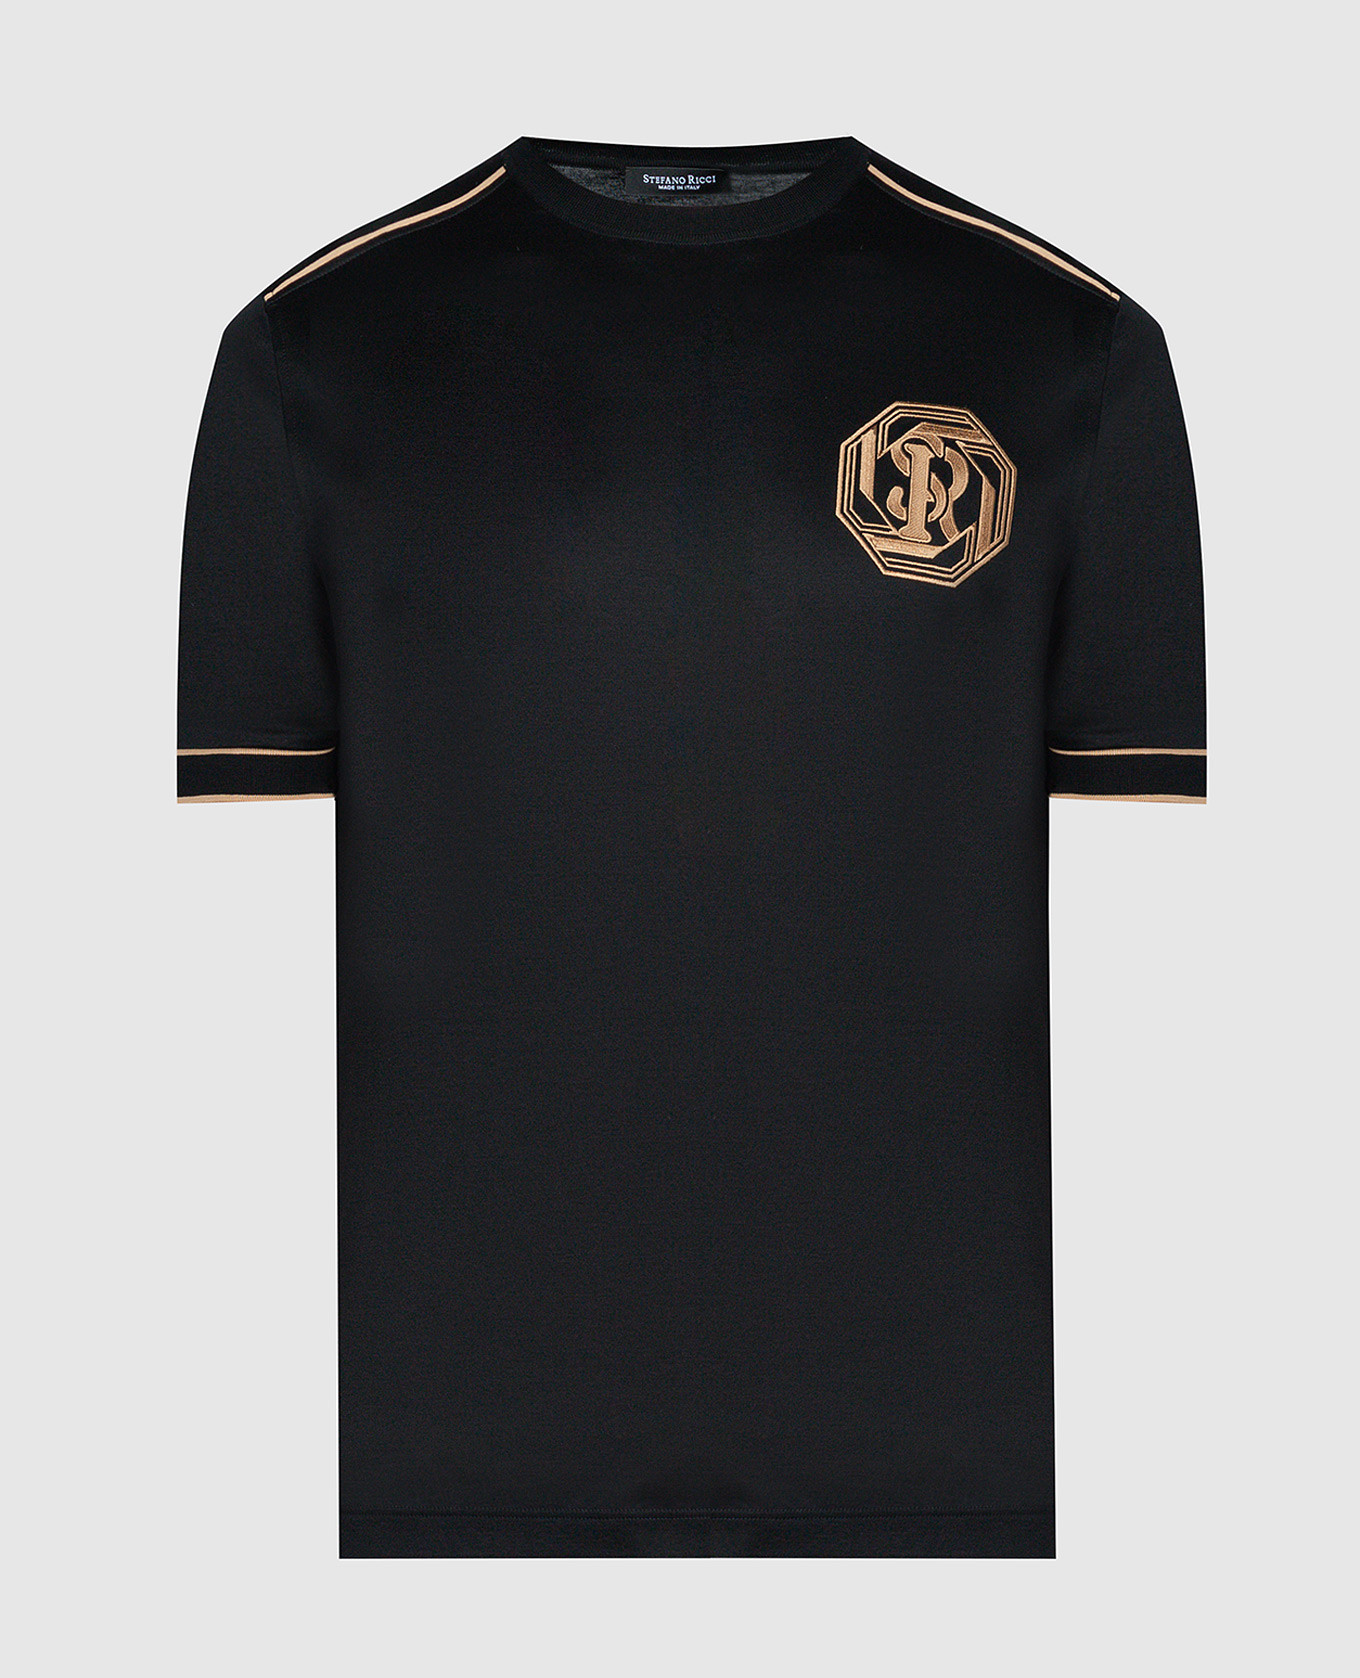 Camiseta negra con logo monograma bordado